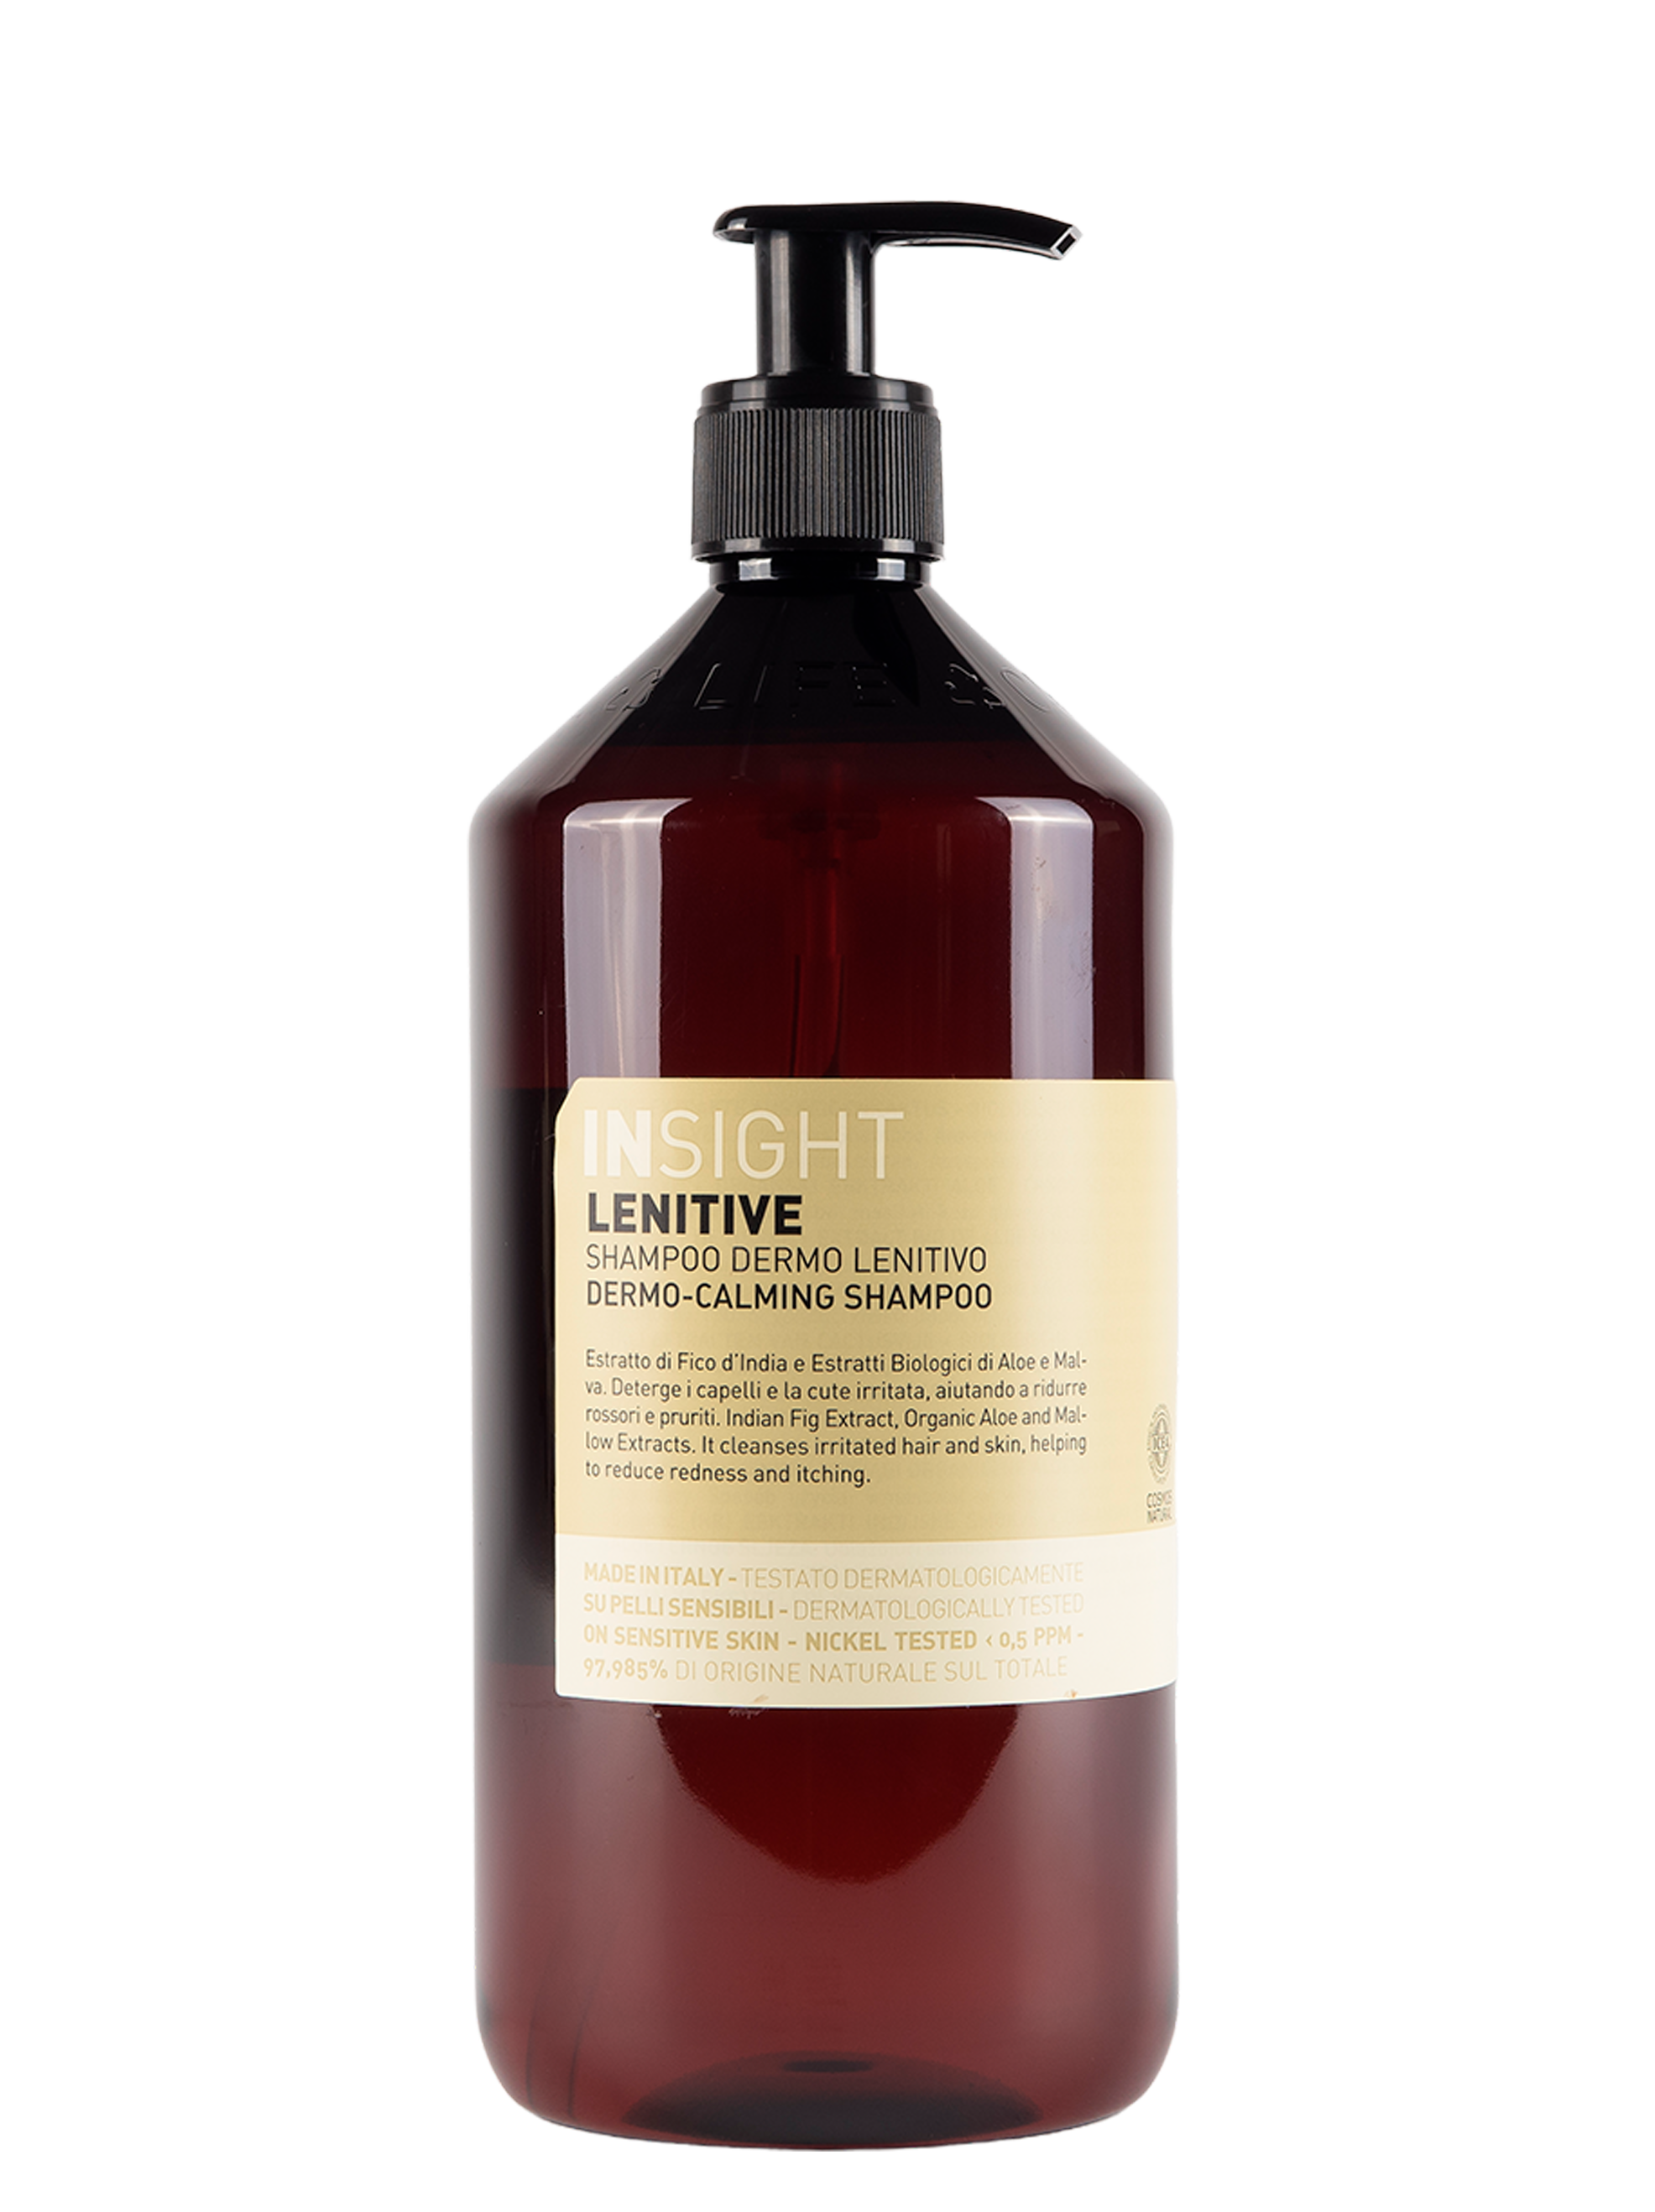 INSIGHT-Lenitive-Dermo-Calming-Shampoo-900ml